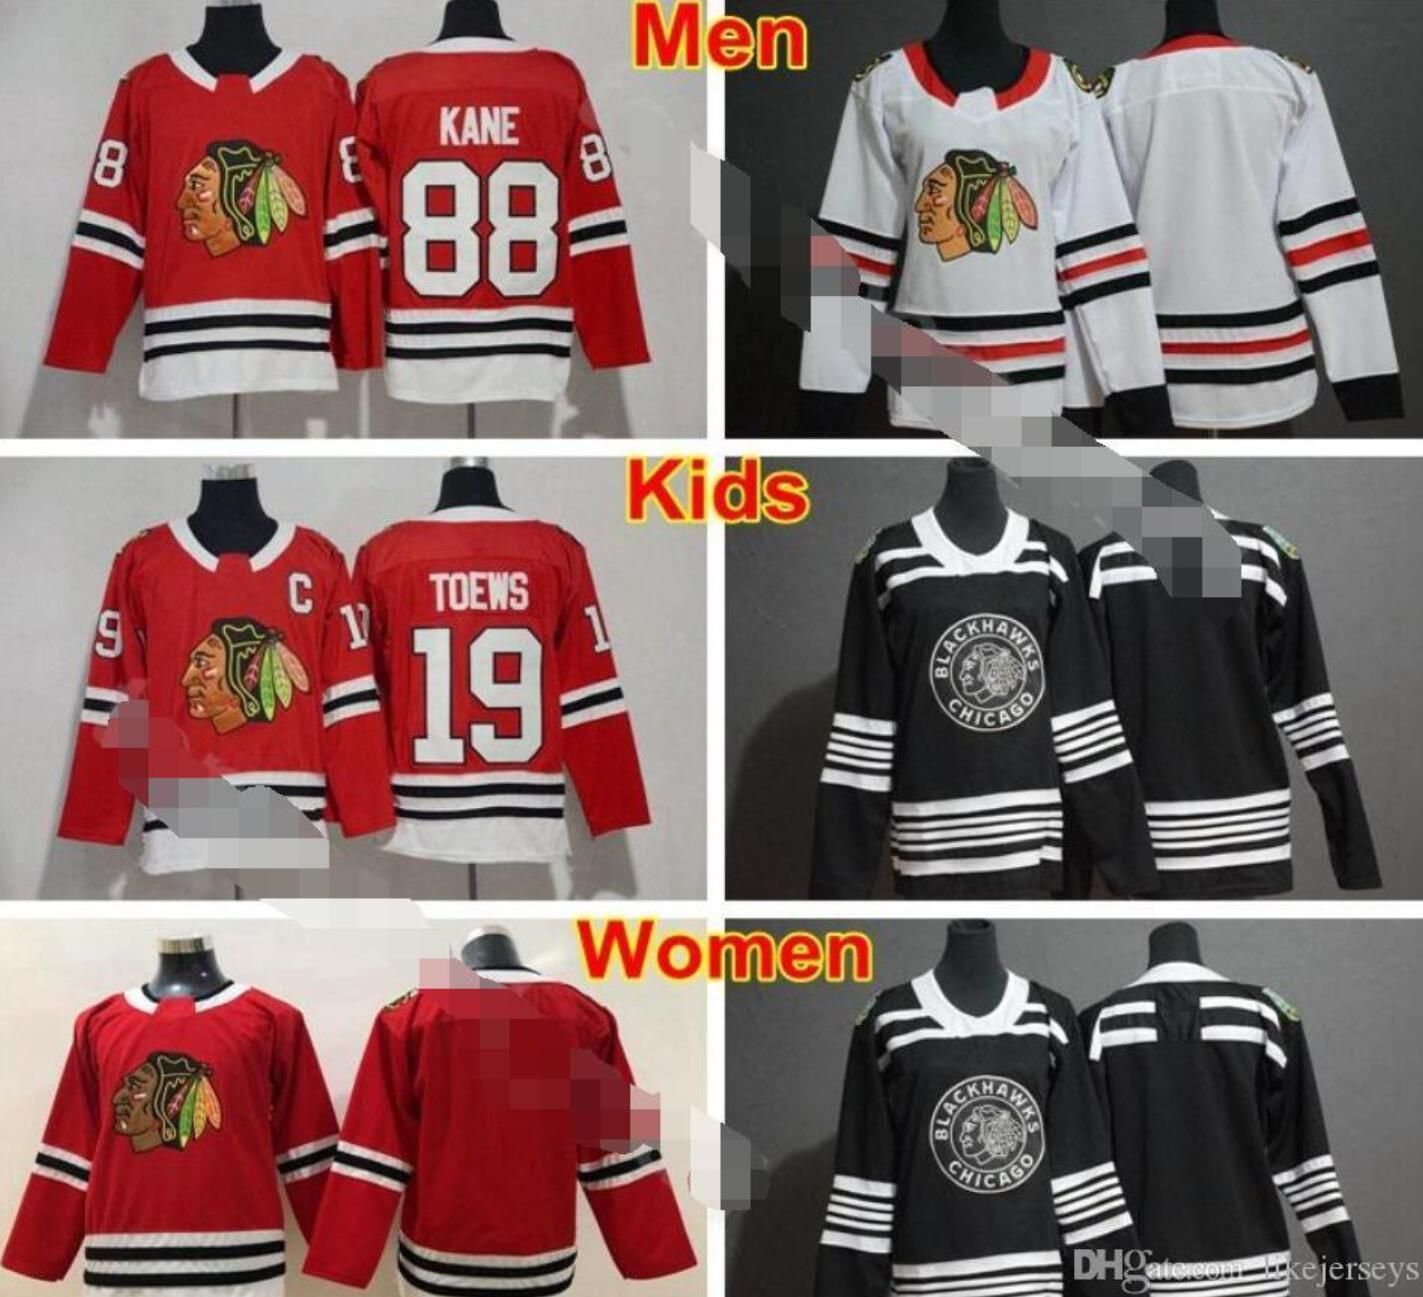 blackhawks jersey colors